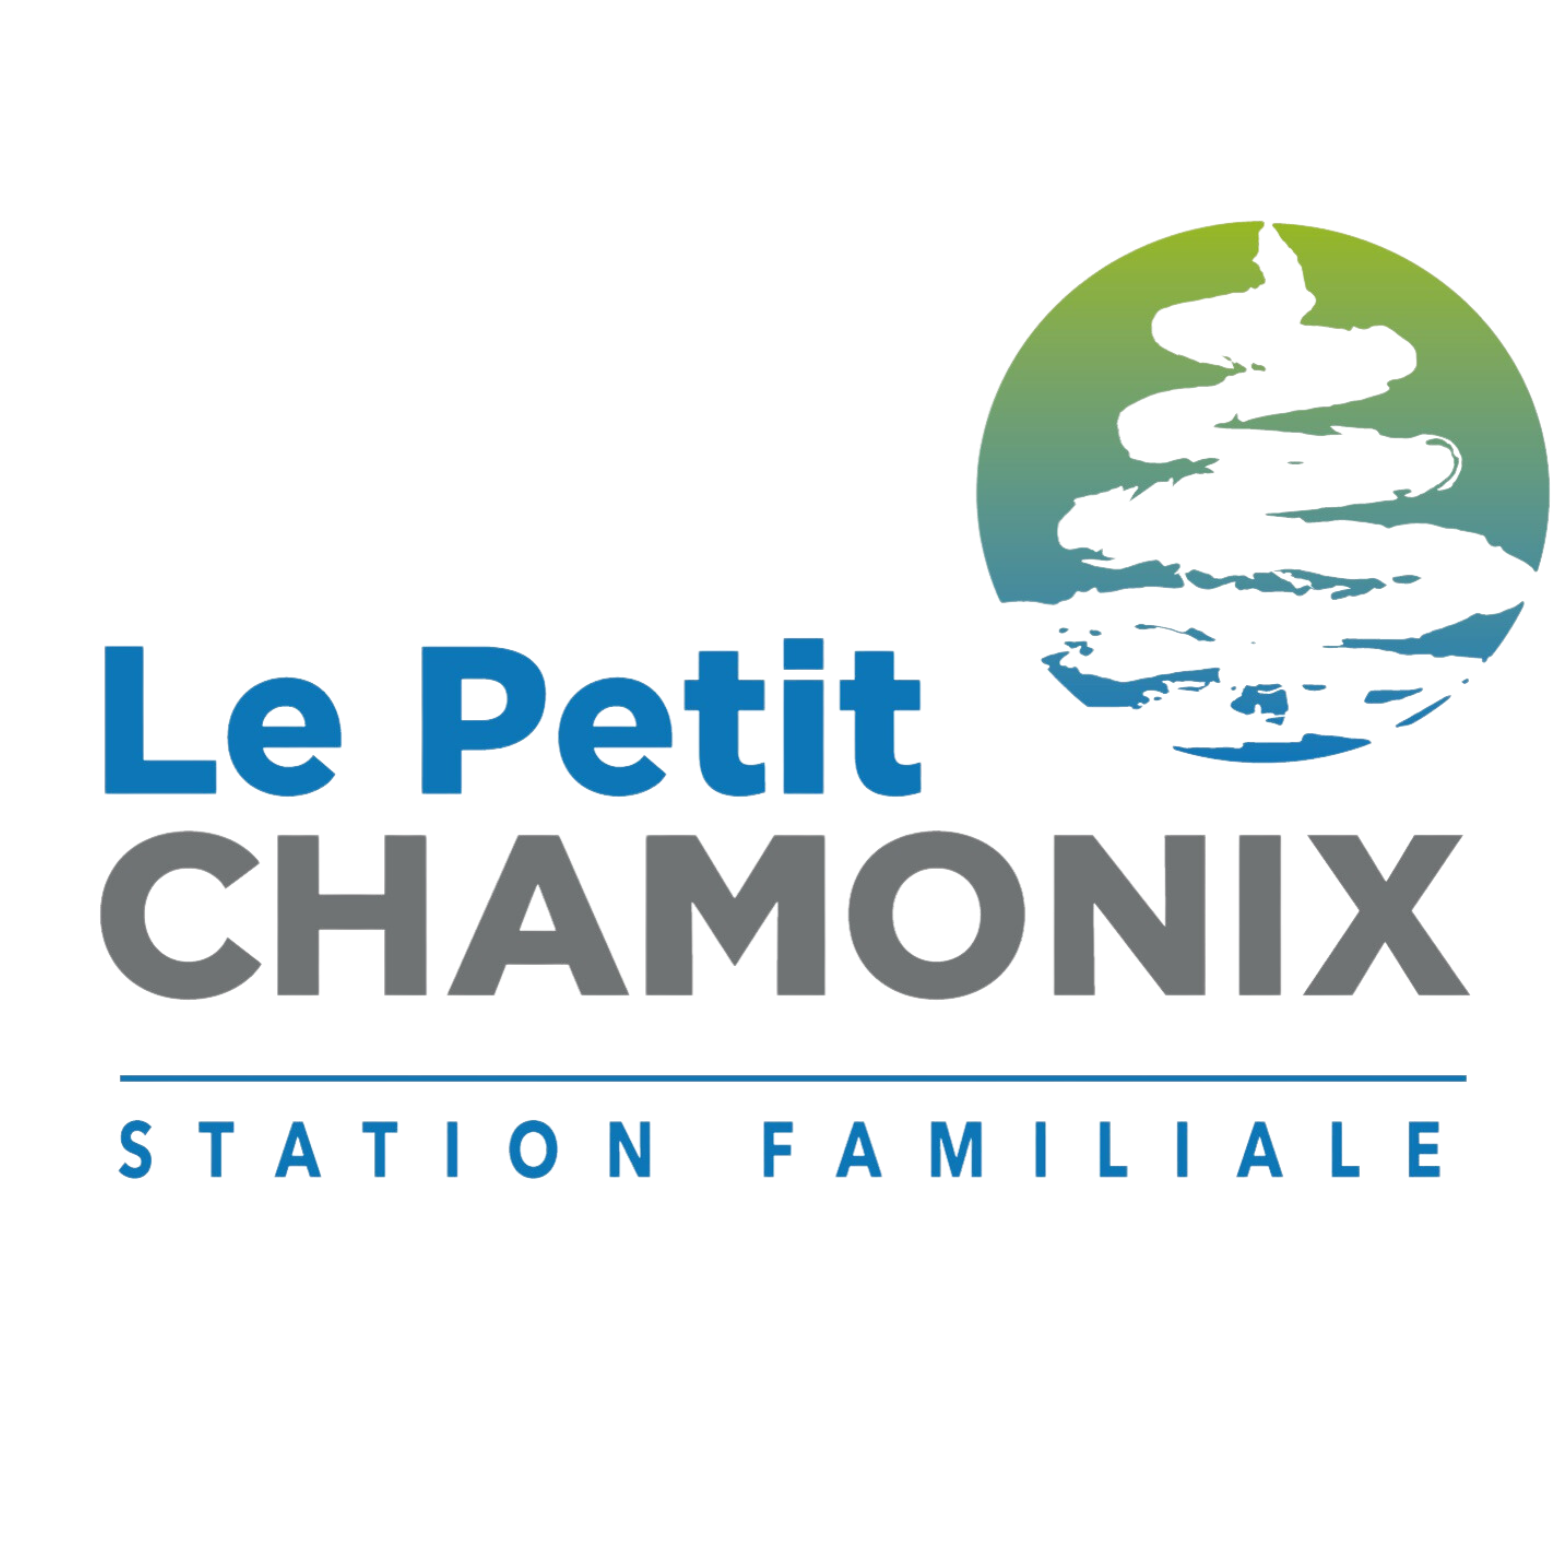 Le Petit Chamonix